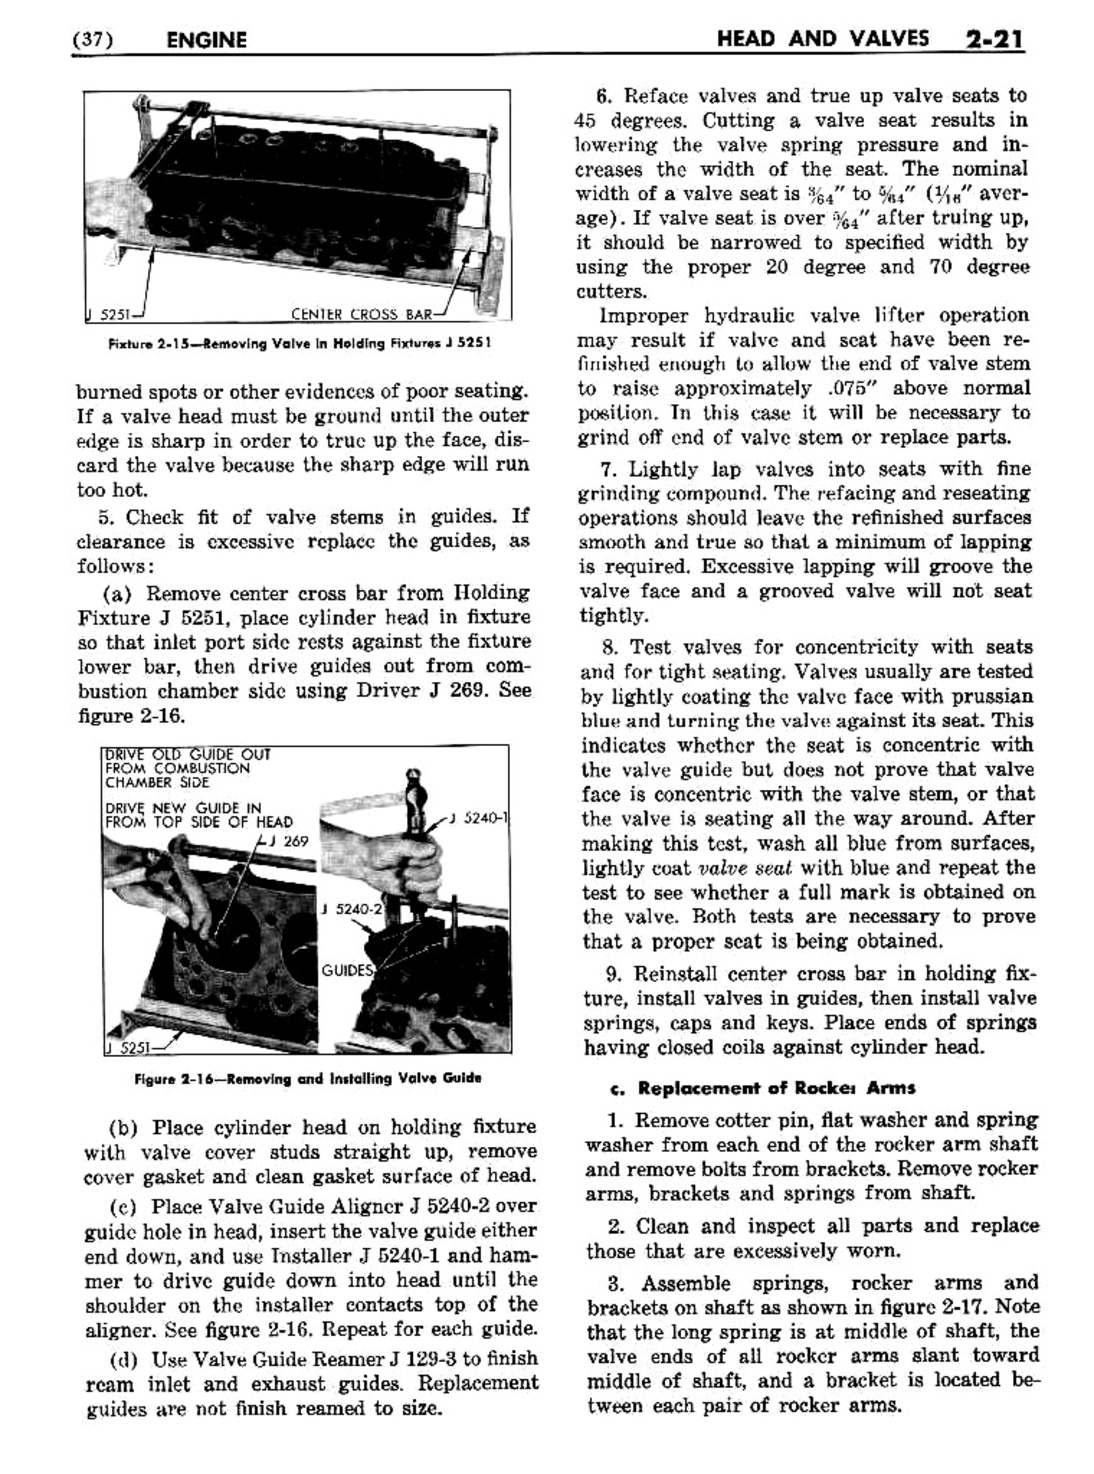 n_03 1954 Buick Shop Manual - Engine-021-021.jpg